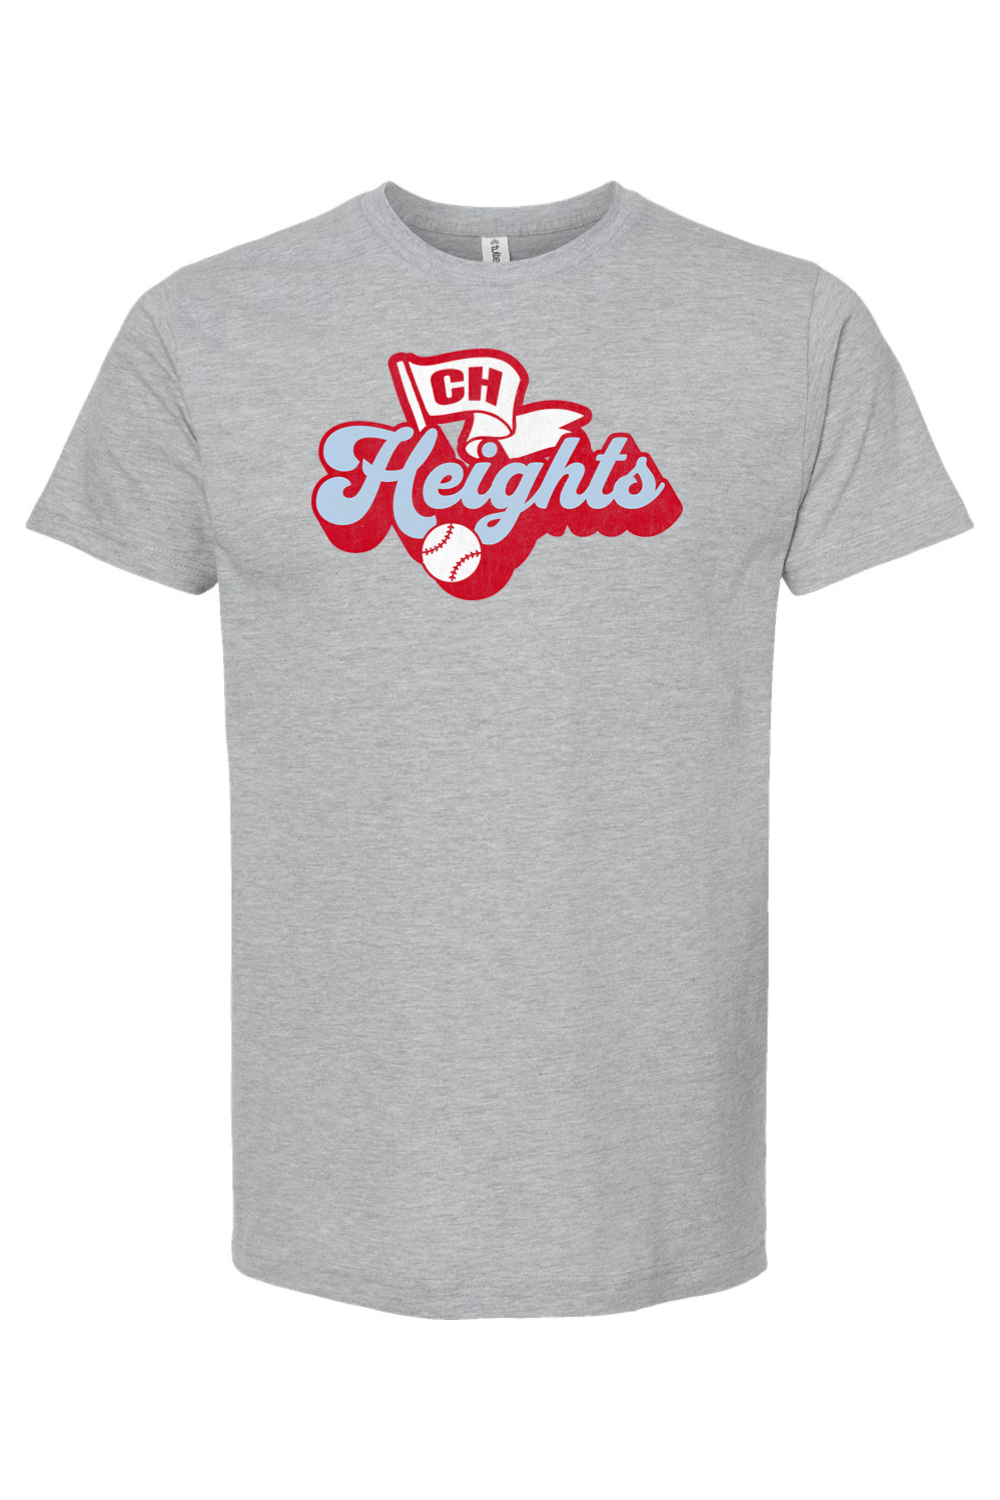 Heights Baseball - Pennant T-Shirt - Yinzylvania